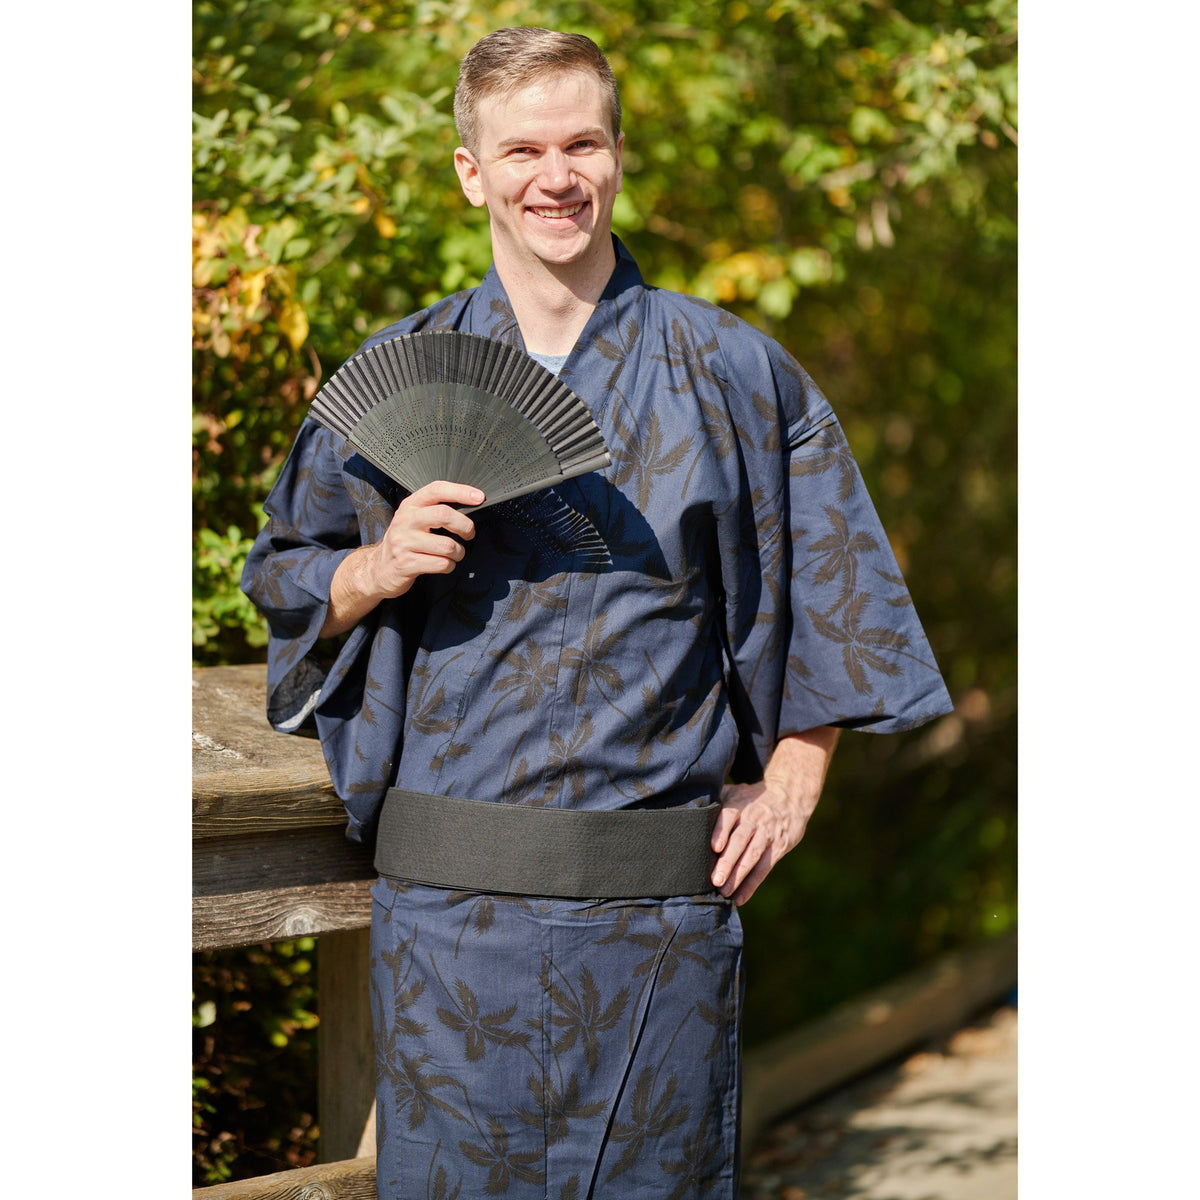 traditional japanese kimono for men